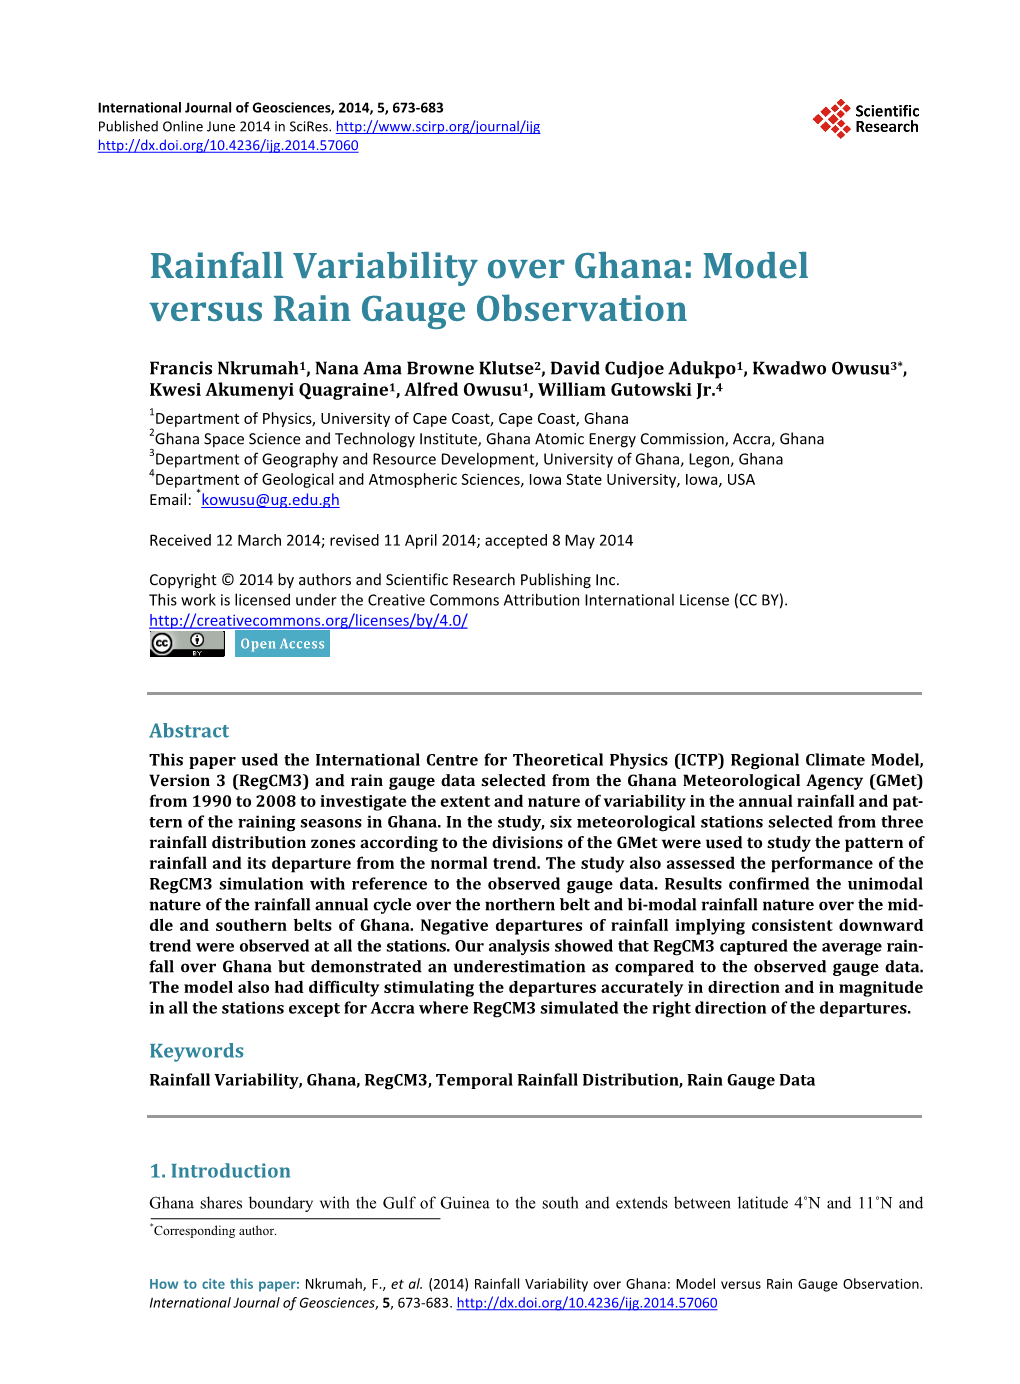 Rainfall Variability Over Ghana: Model Versus Rain Gauge Observation